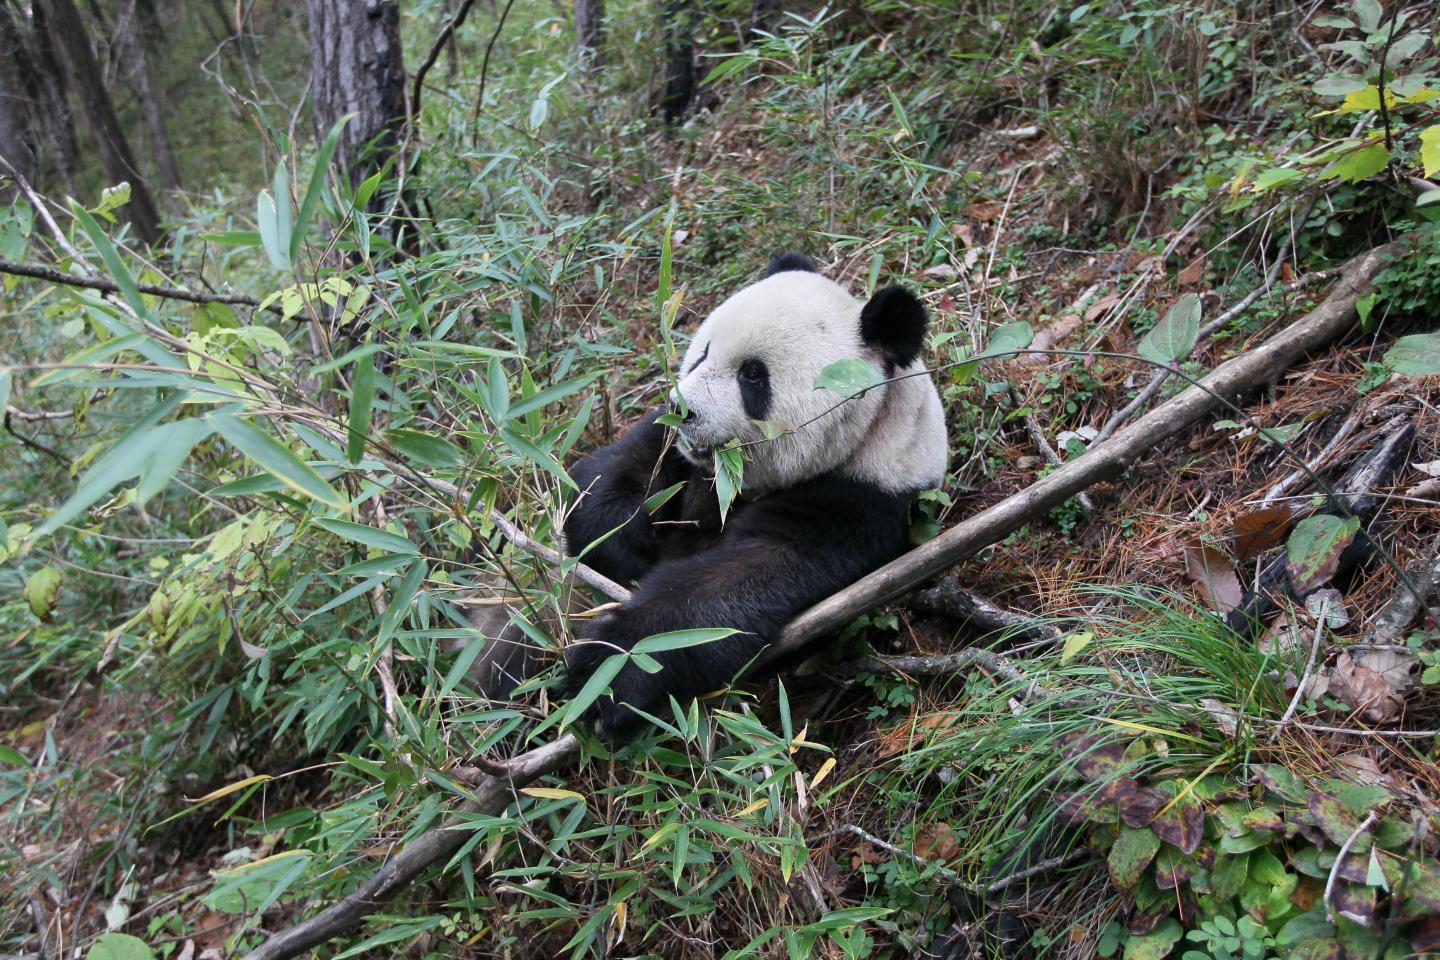 Ancient pandas weren't exclusive bamboo eater | EurekAlert!